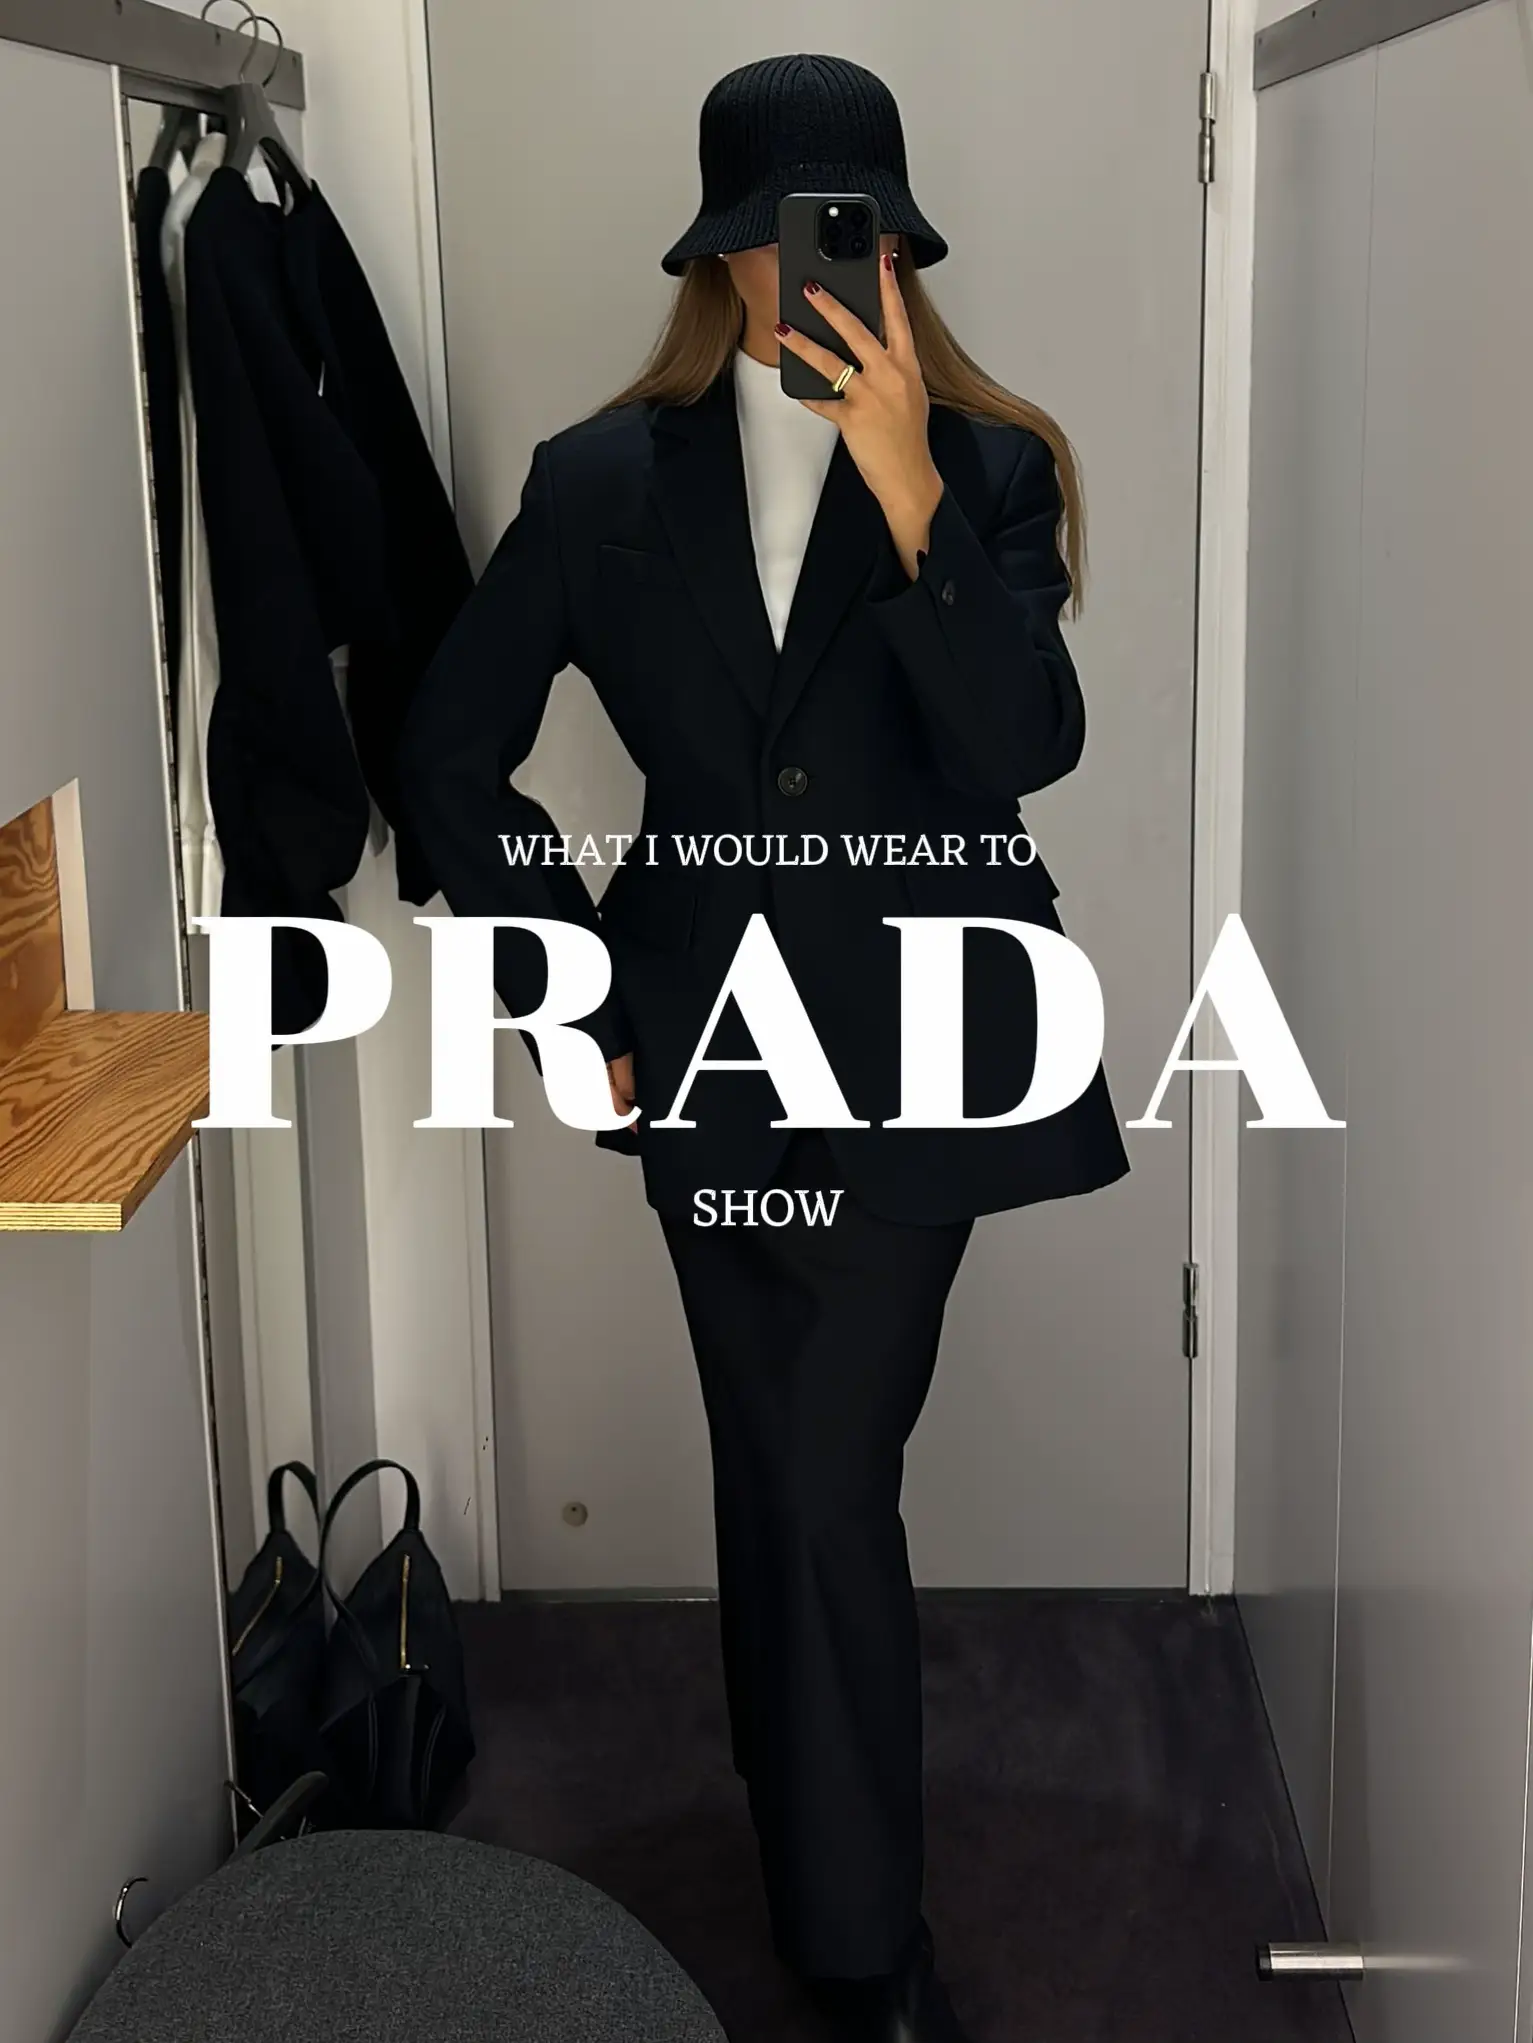 Prada Suit and tie  Prada aesthetic, Prada, Old money aesthetic